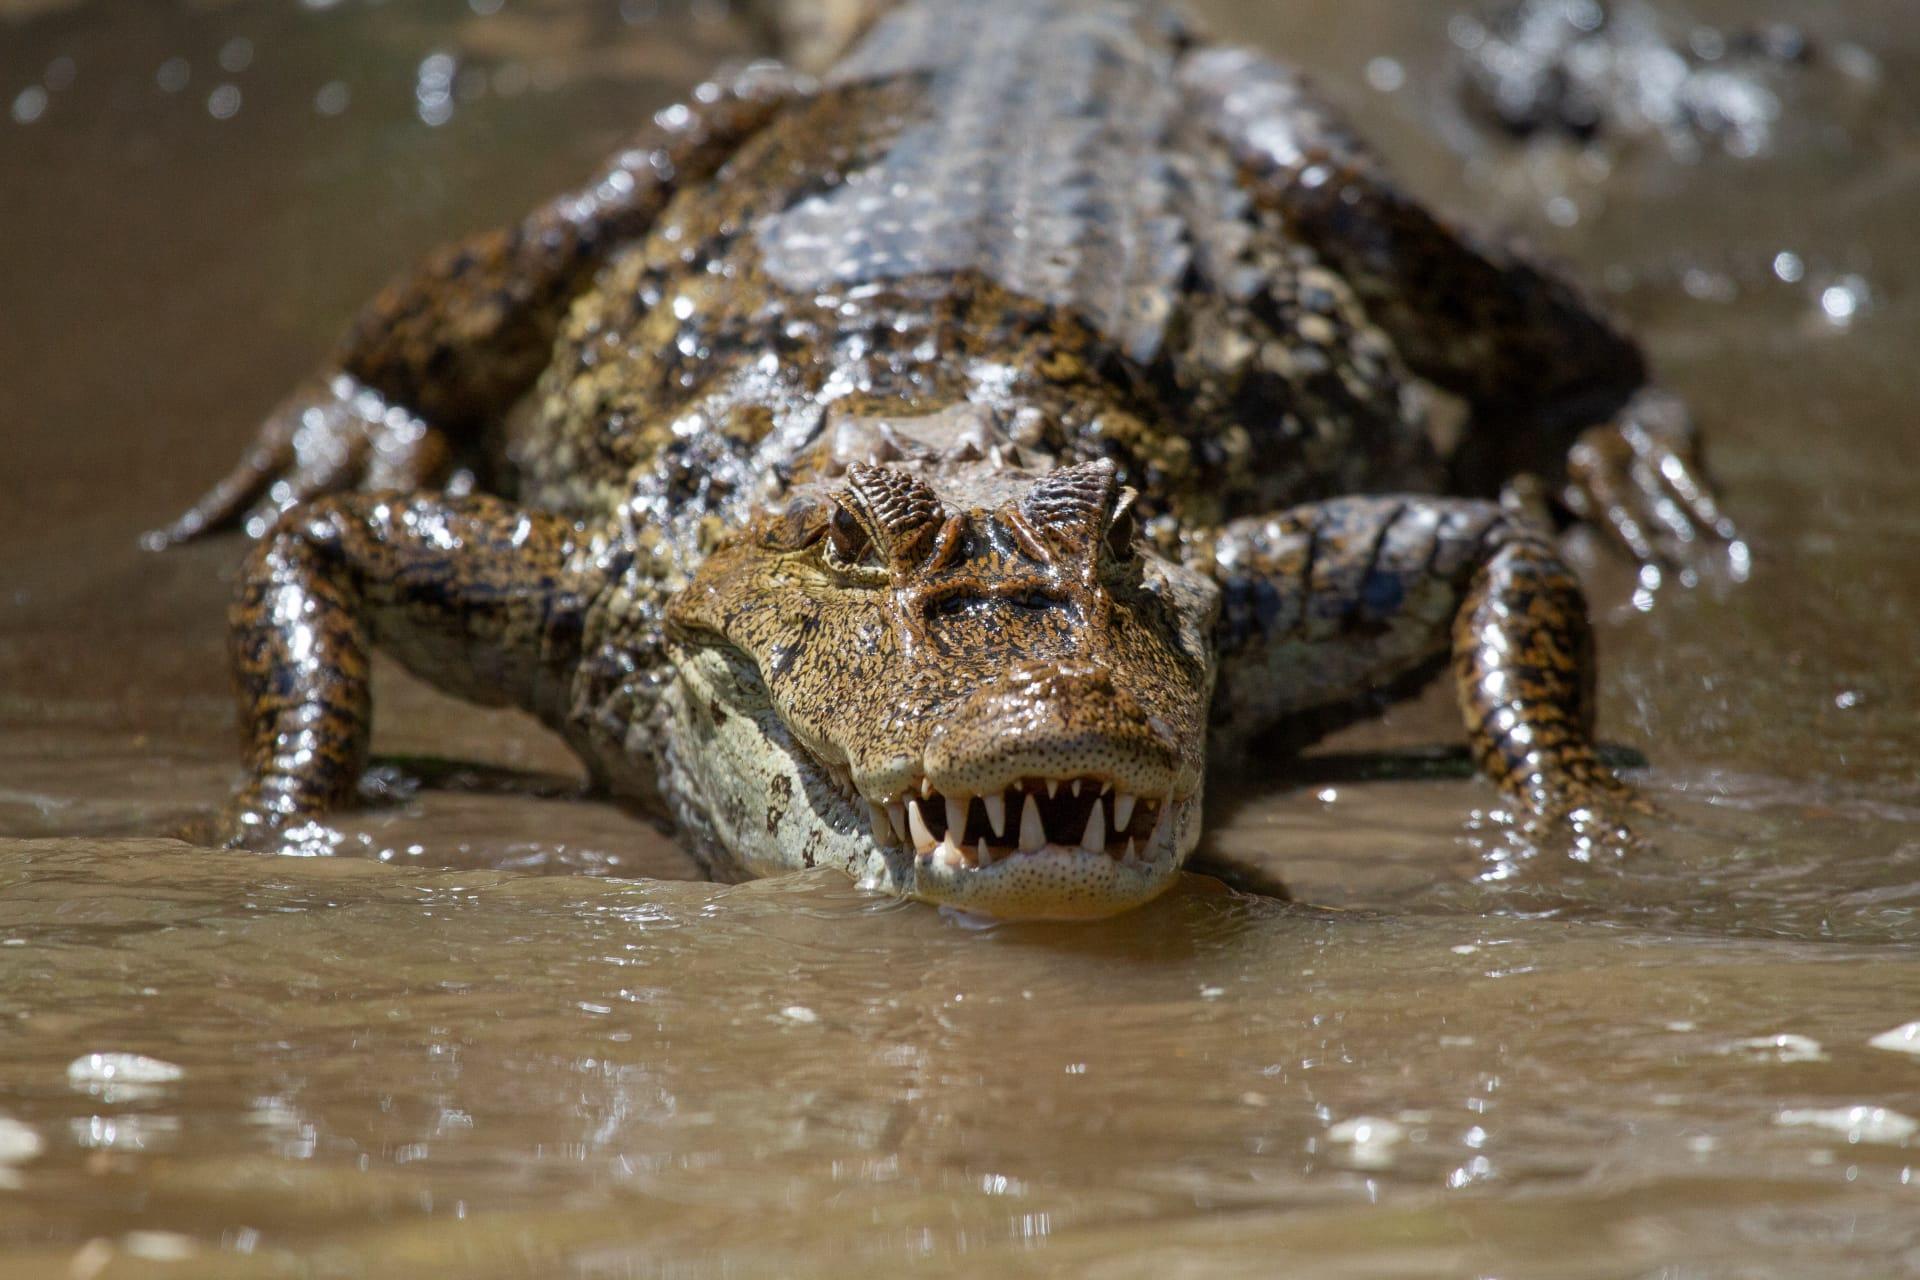 Nile crocodile pictures